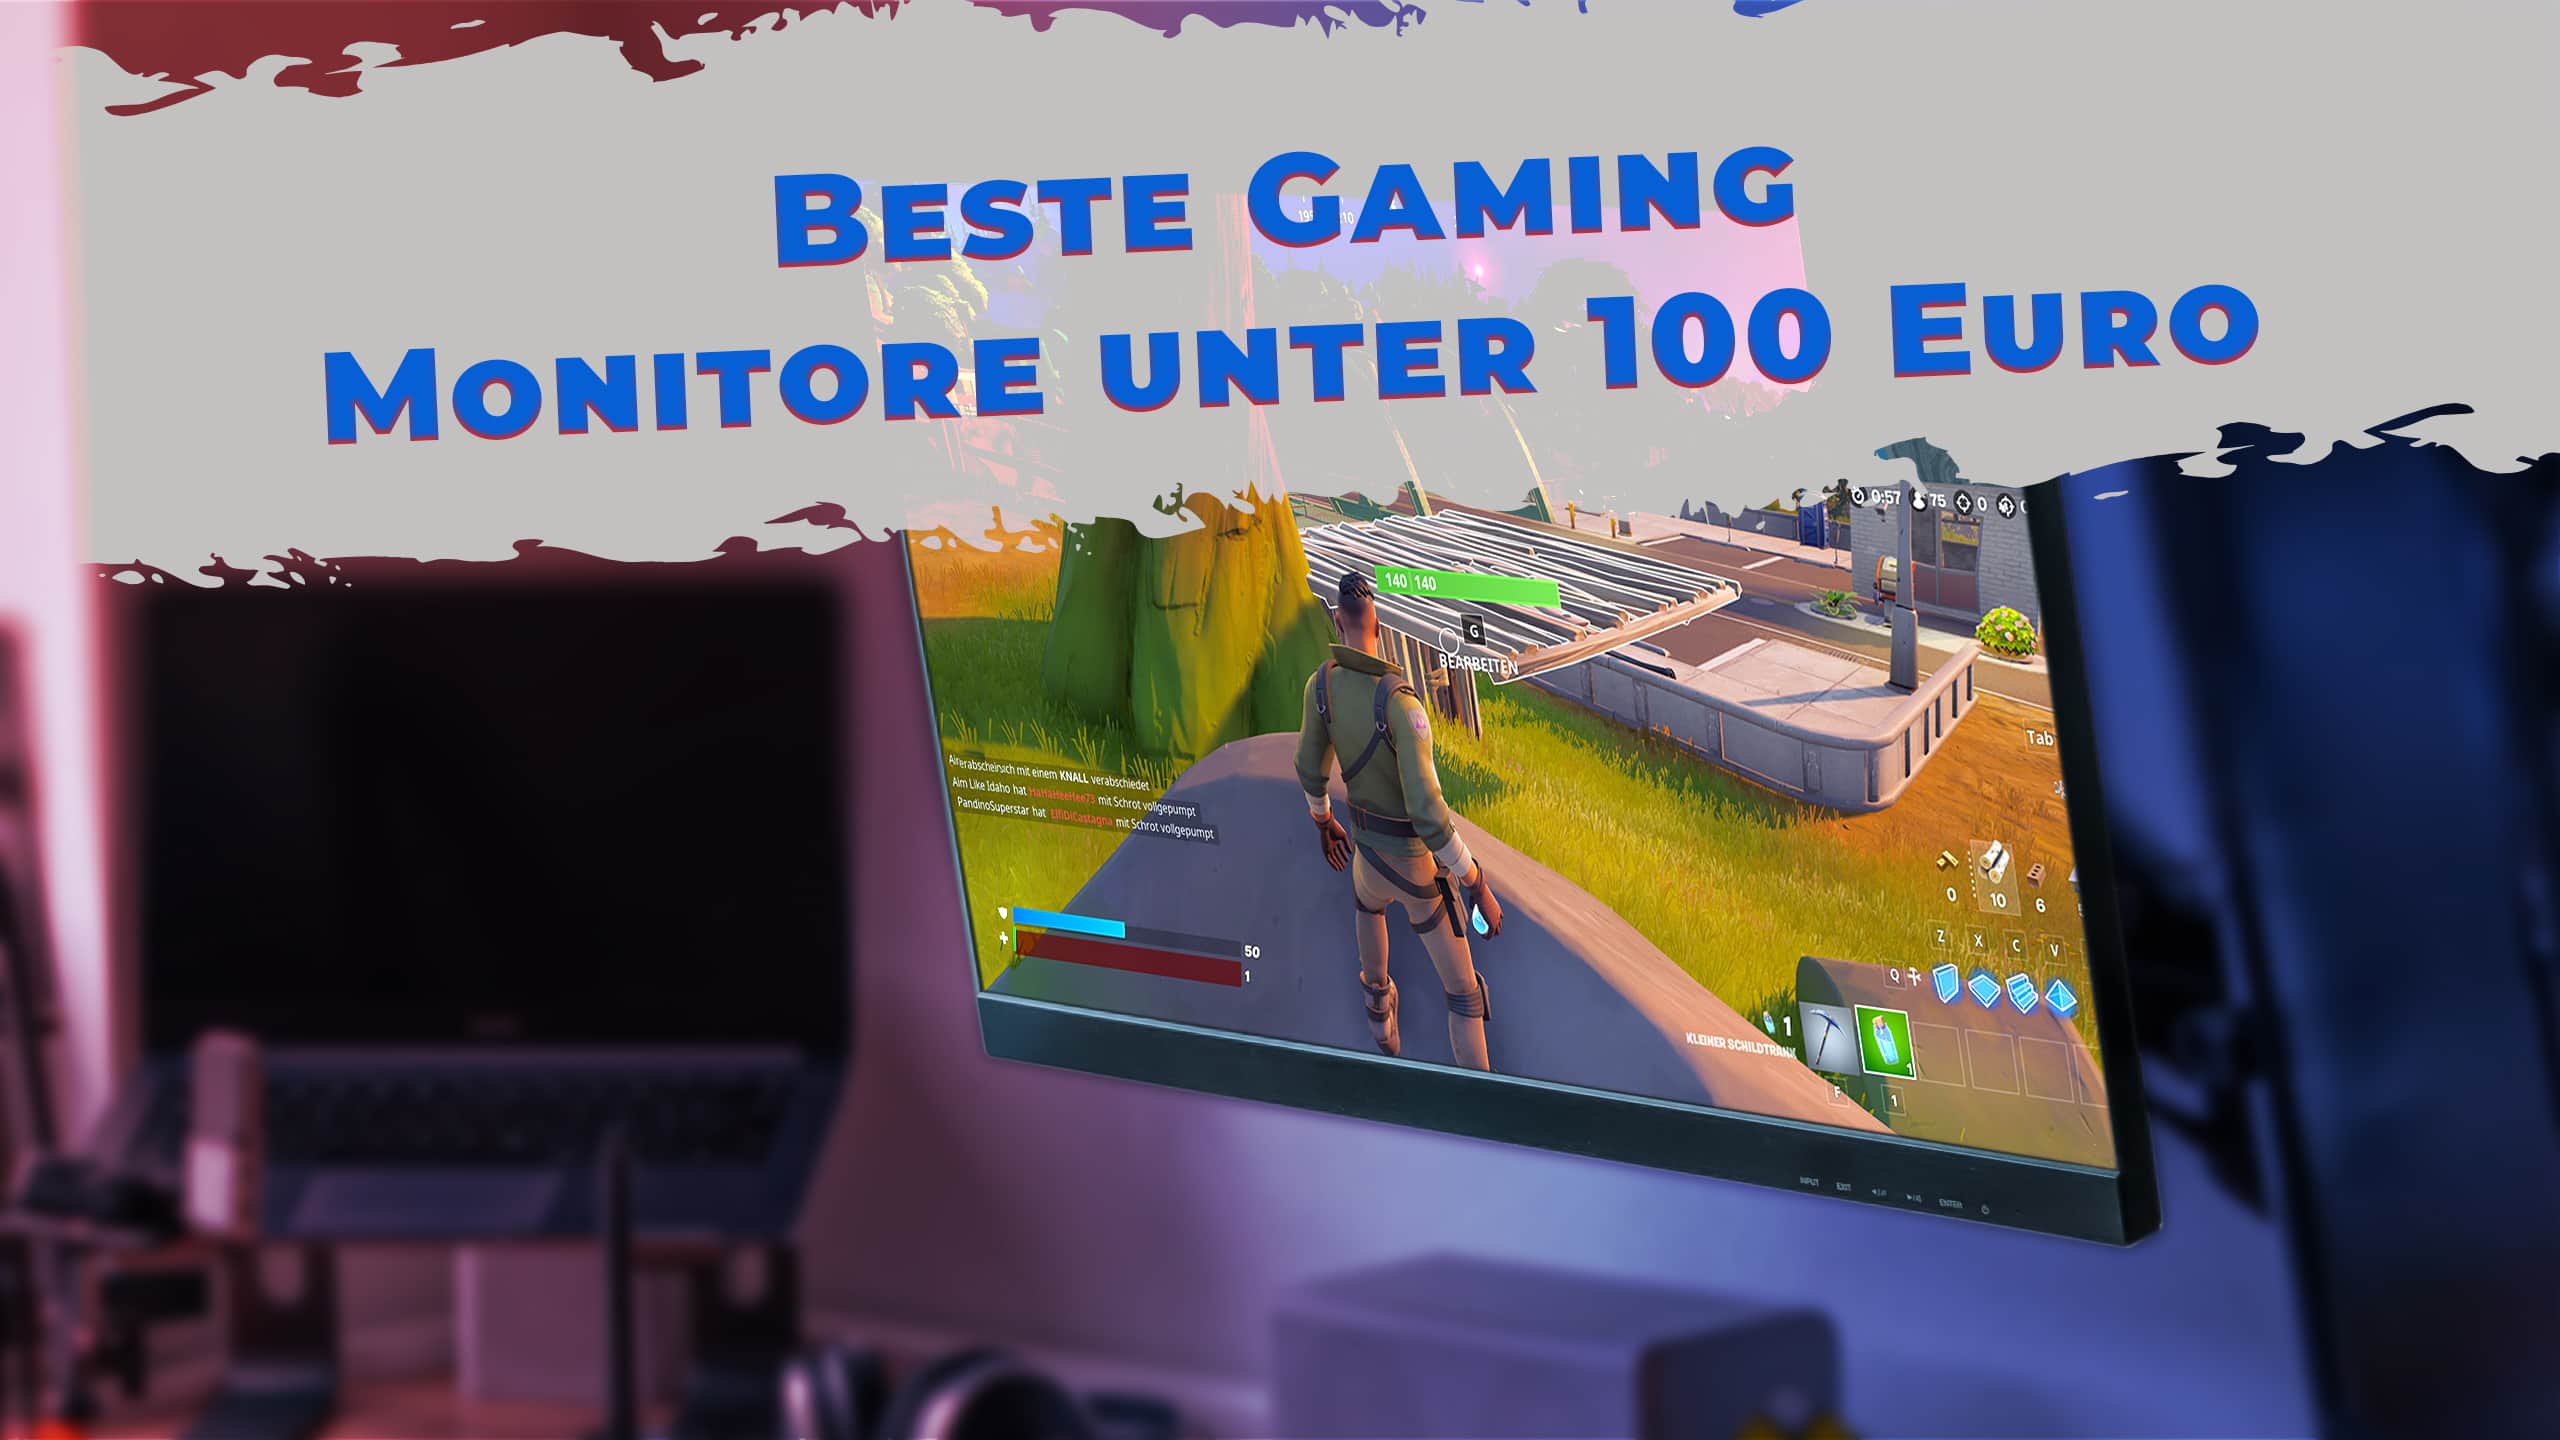 Beste Gaming Monitore unter 100 Euro